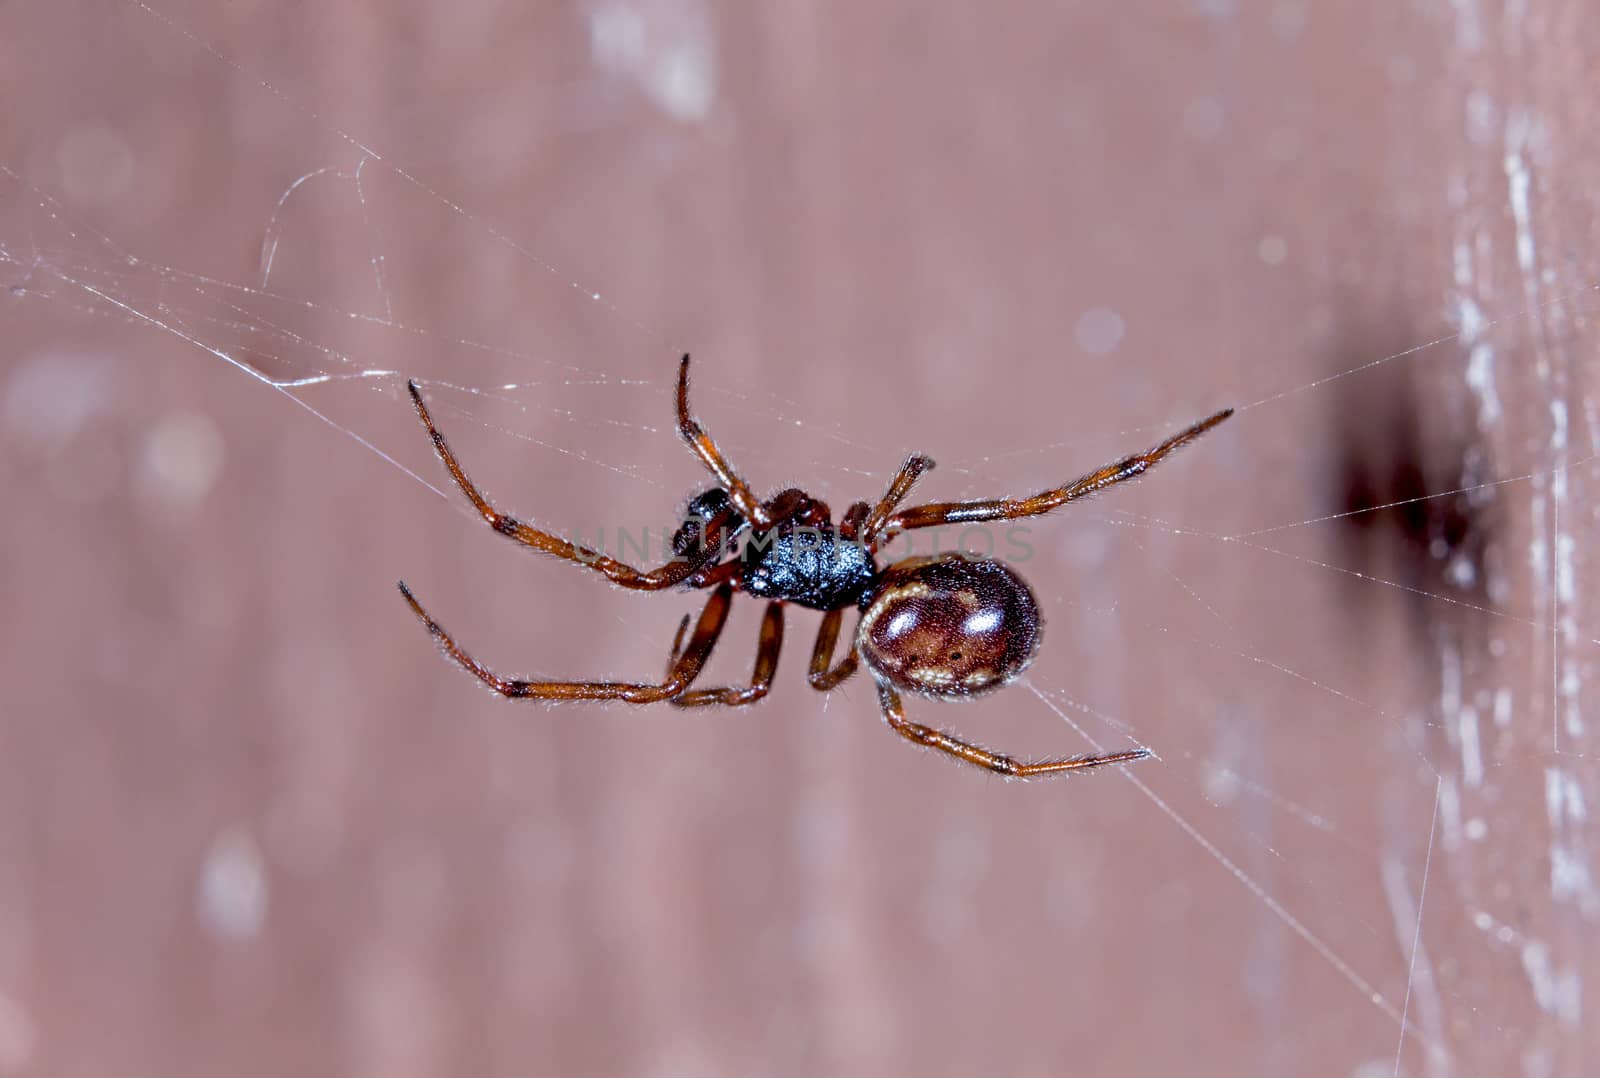 Small spider on a silk tread